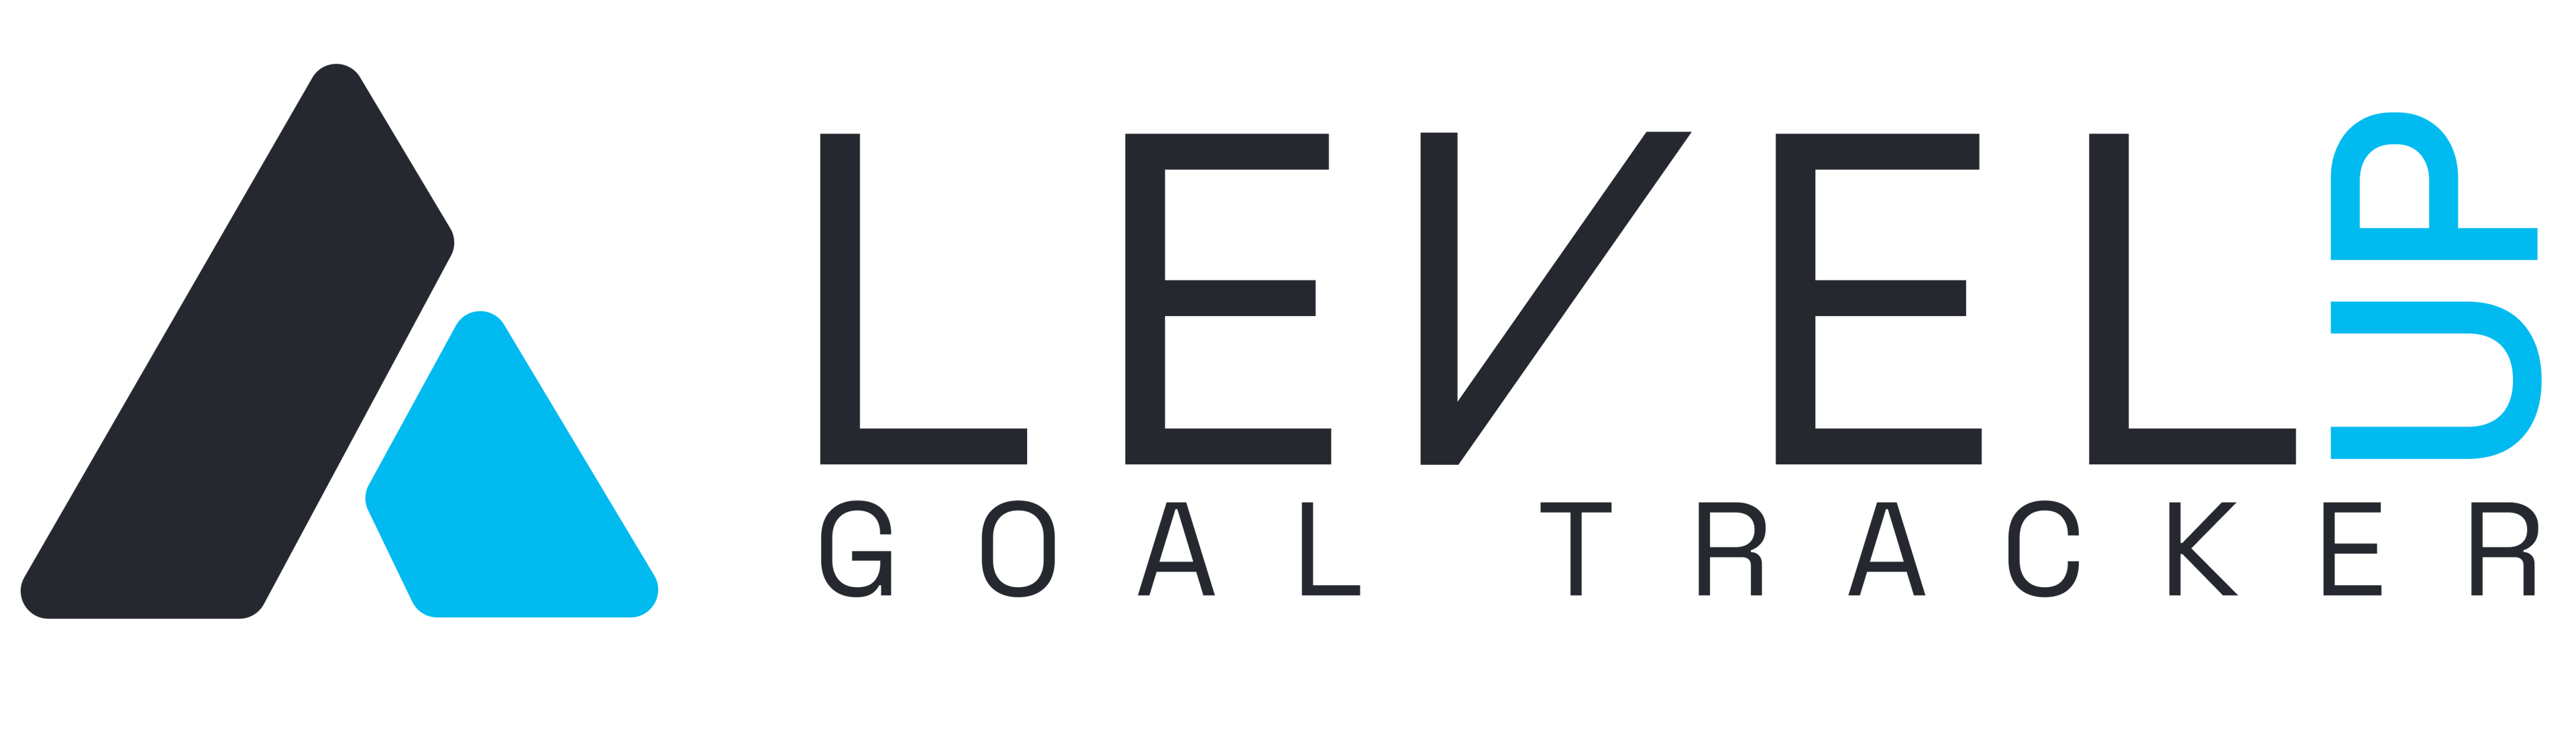 Level Up Goal Tracker Logo